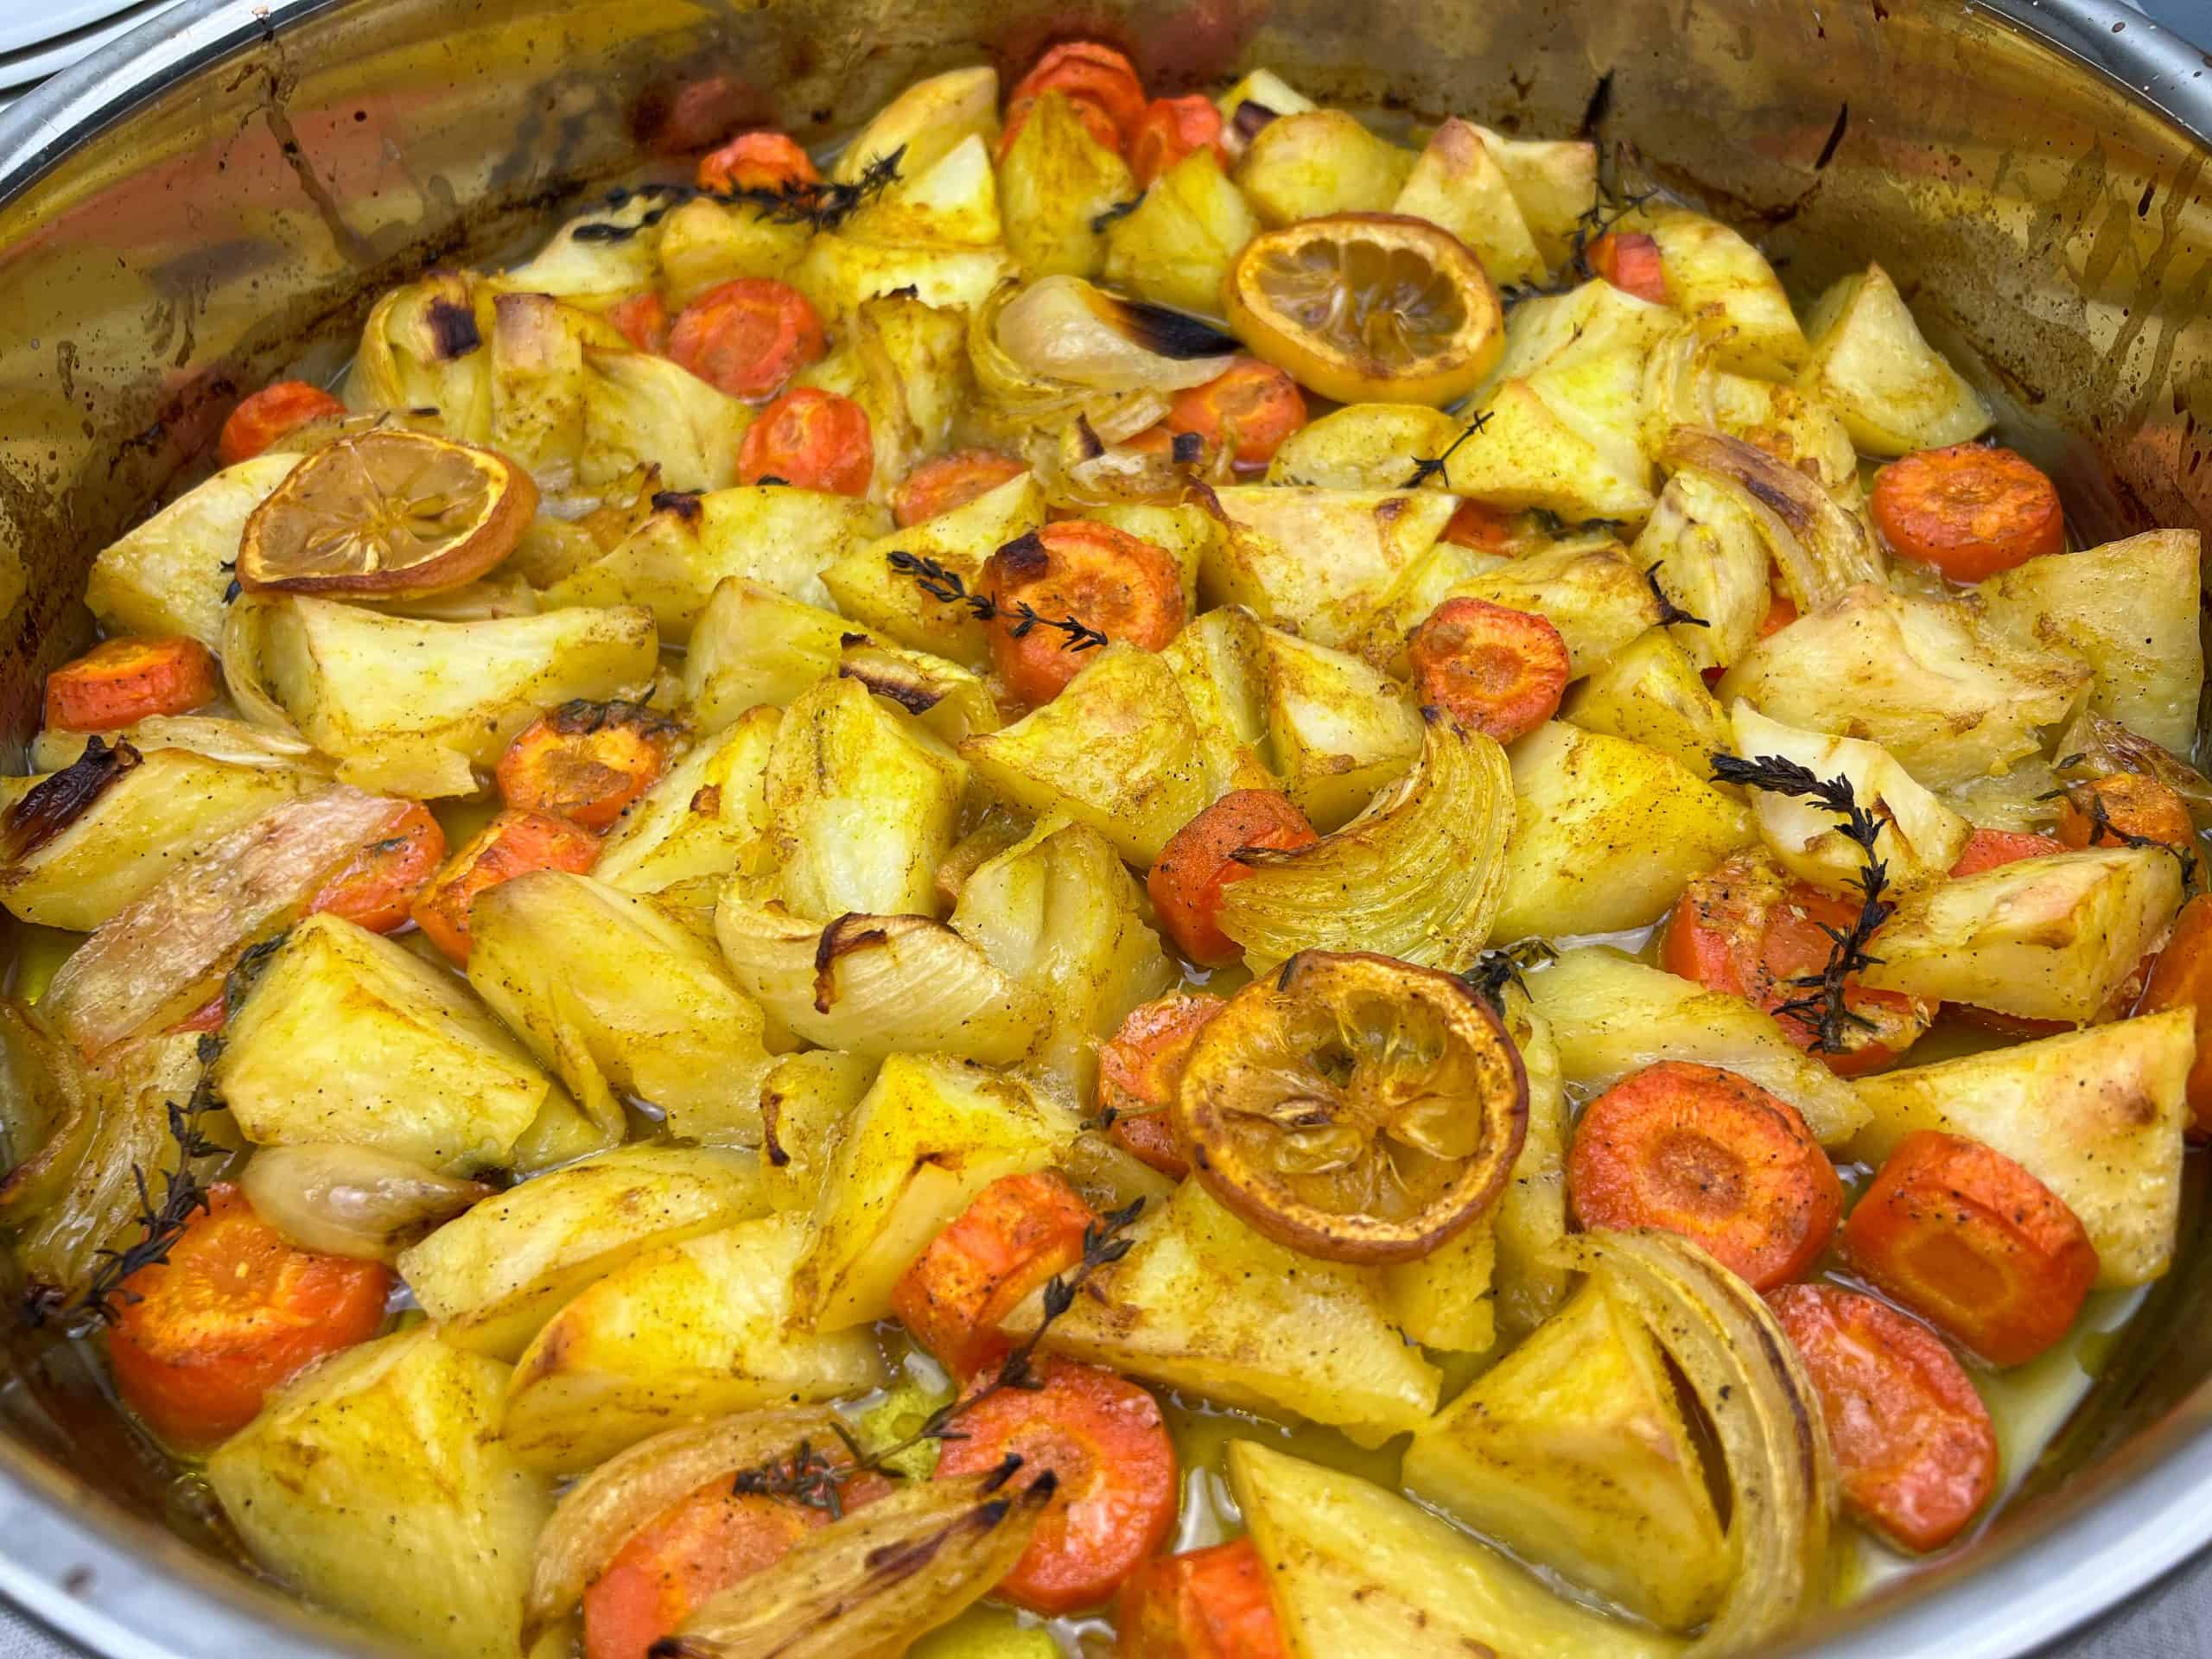 Greek style rosemary roasted potatoes and carrots - Vicki's Greek Recipes